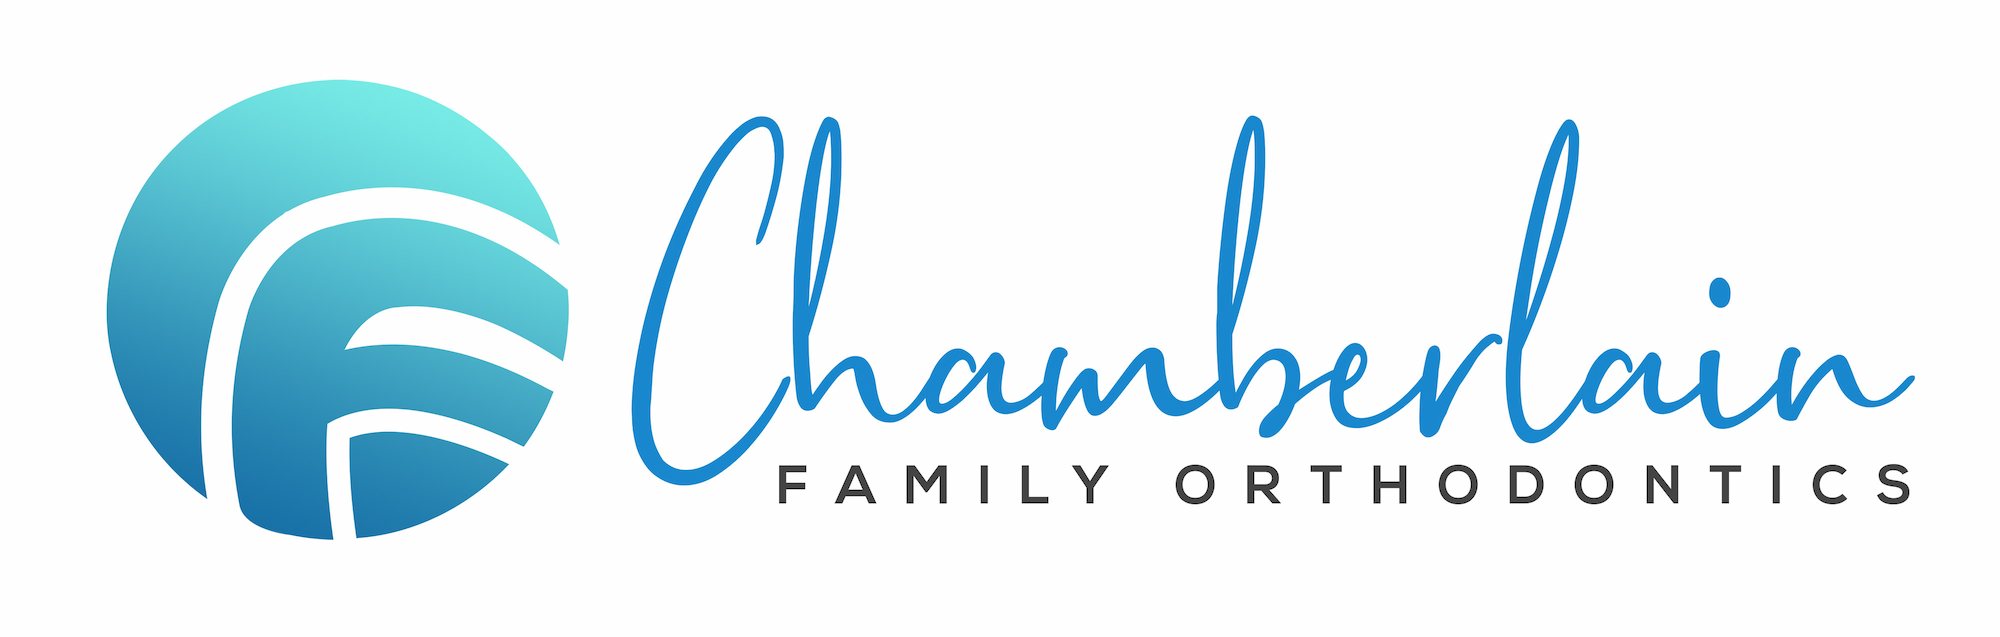 Chamberlain Family Orthodontics logo